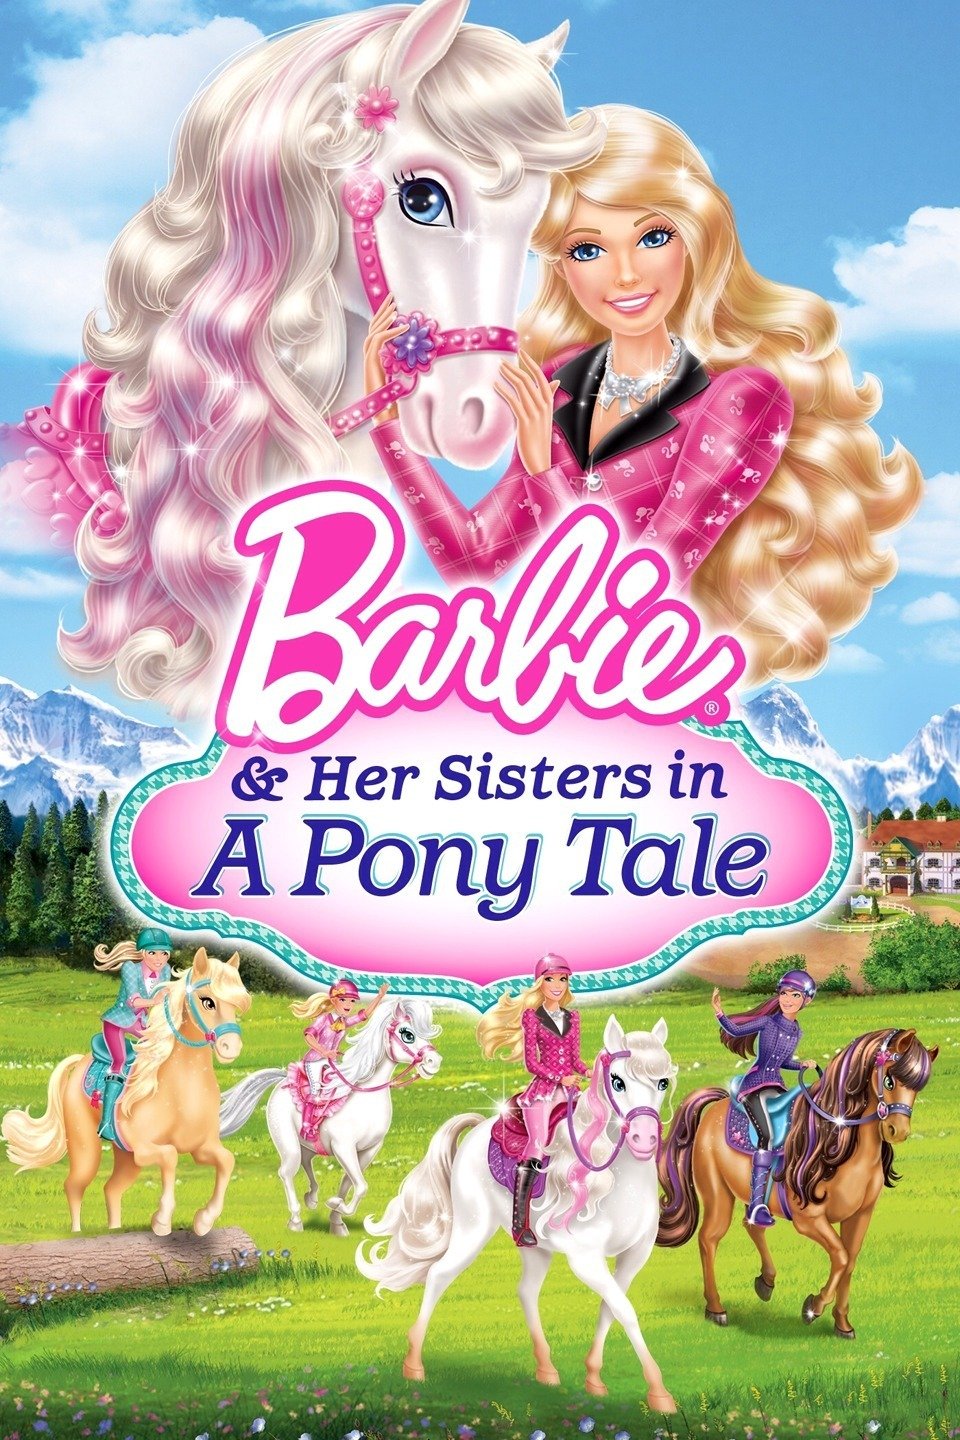 Download film barbie as the island princess subtitle indonesia